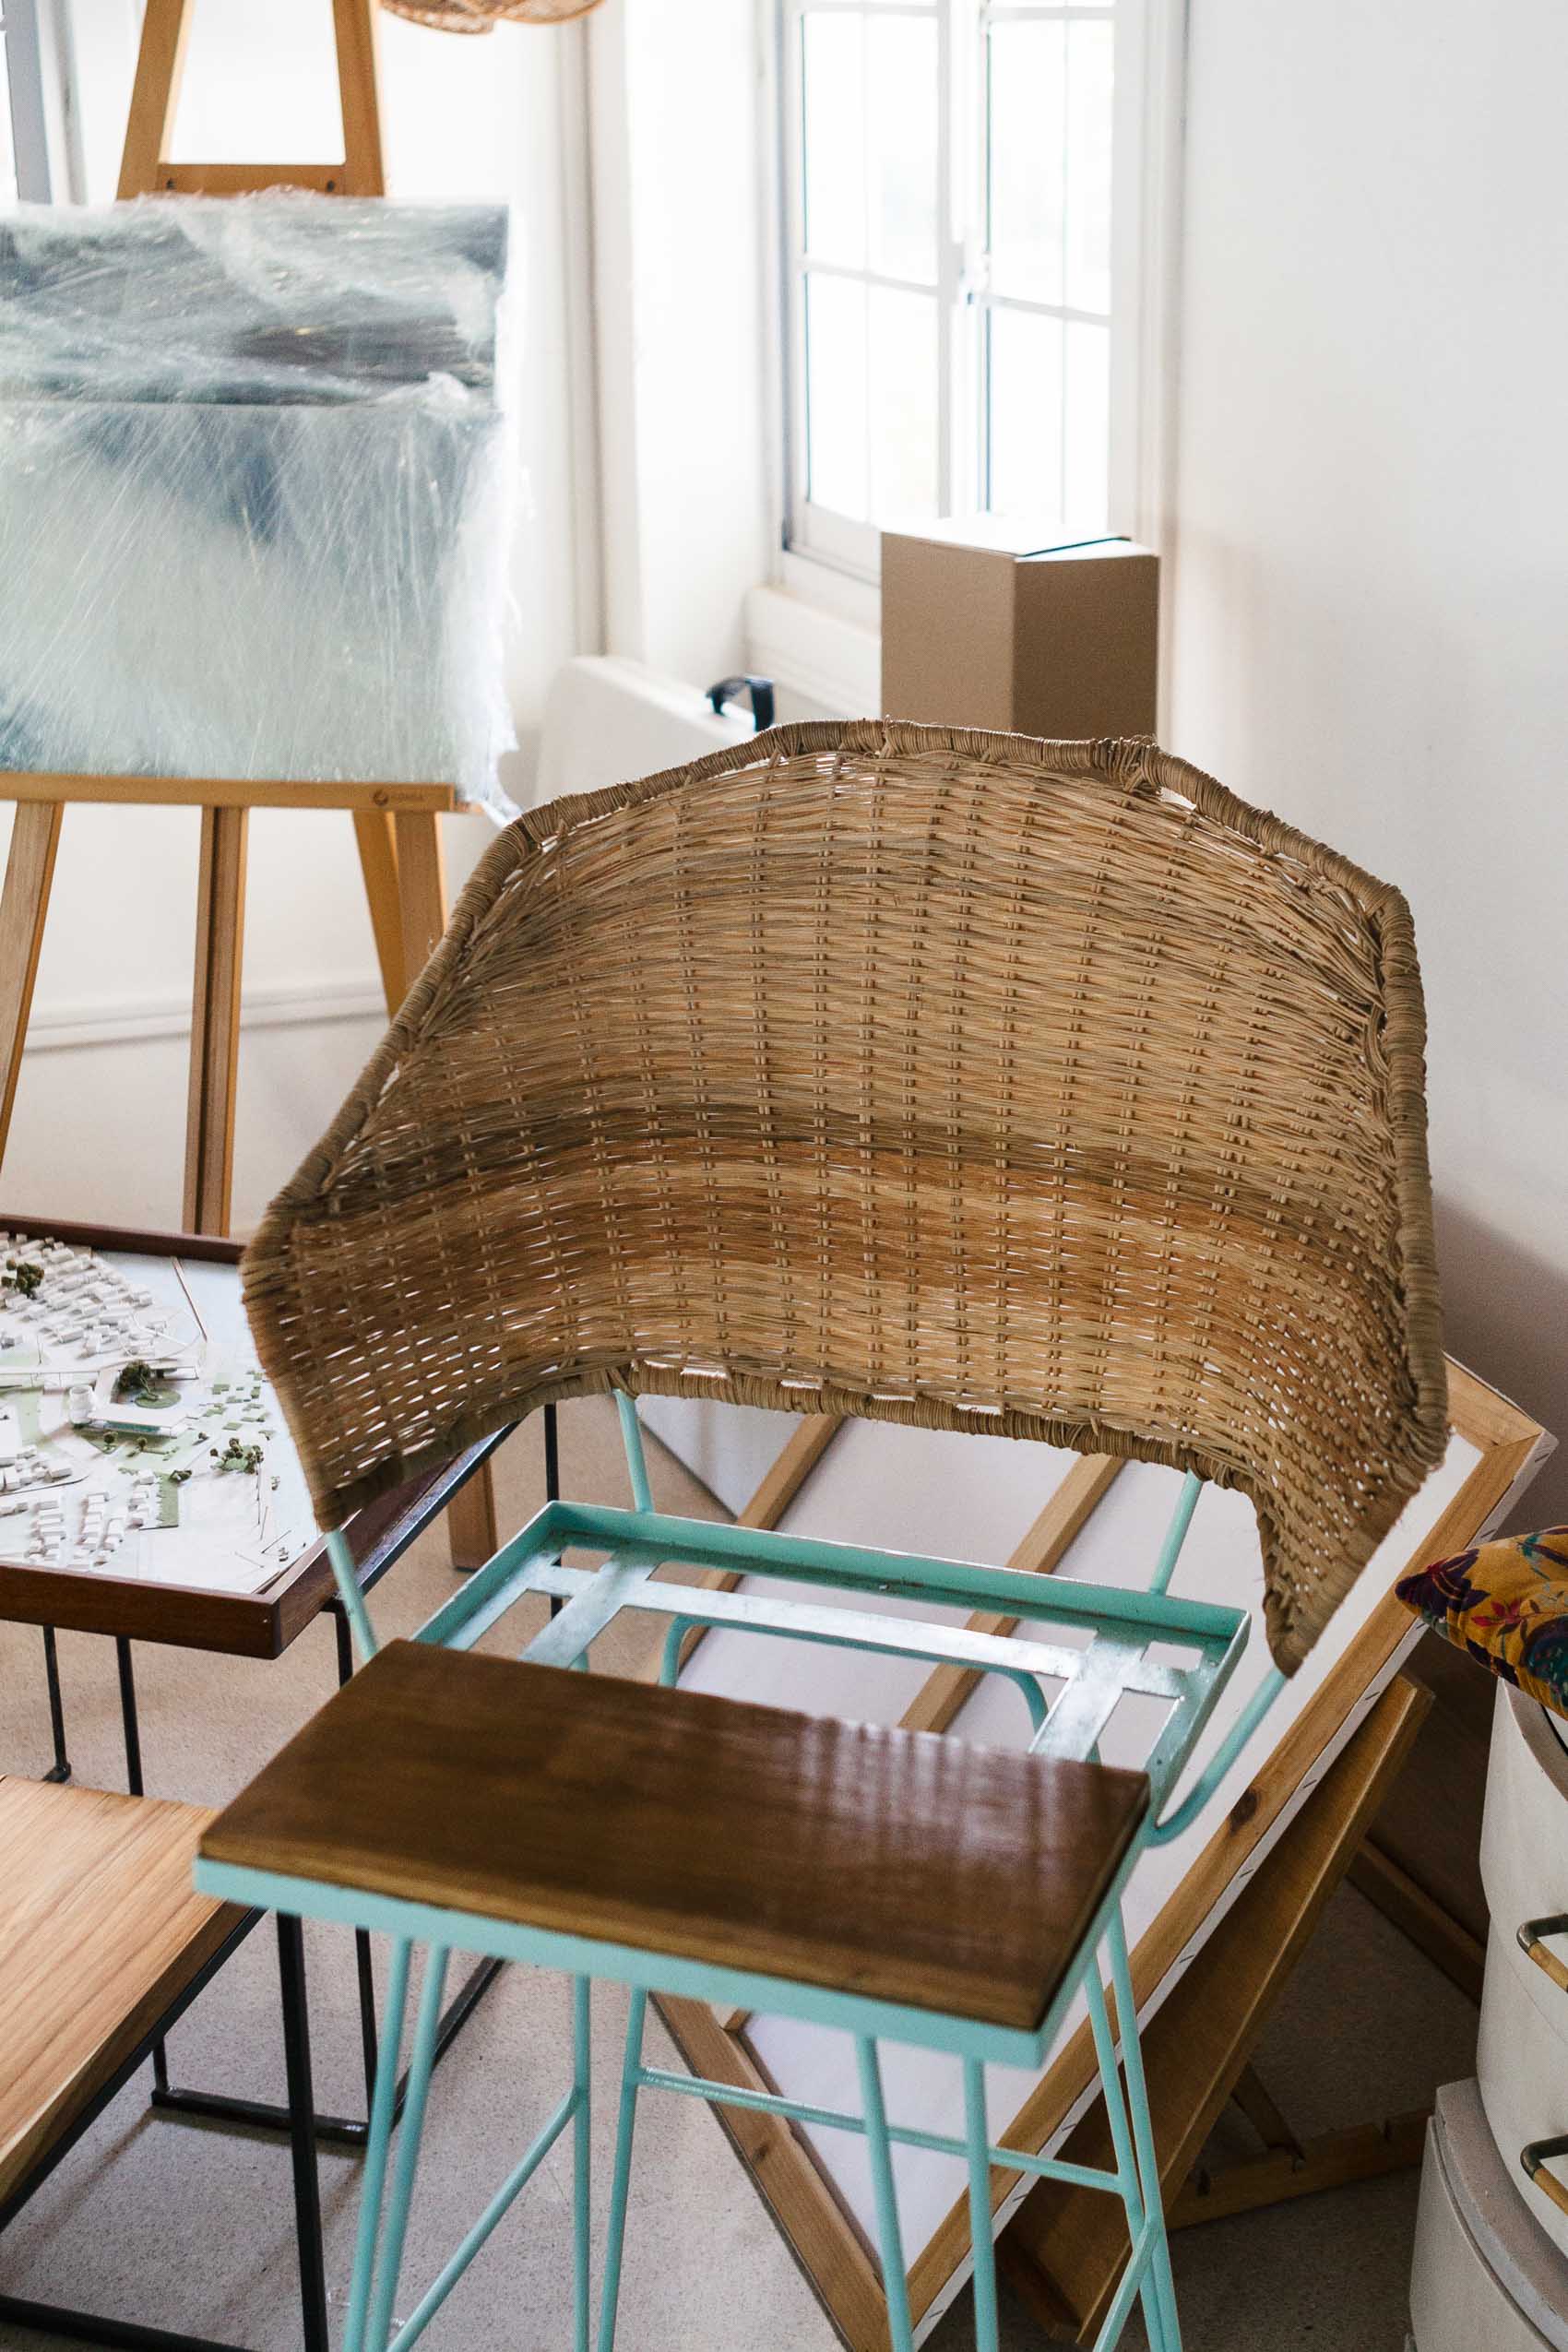 Test for a furniture design made with iron and rattan designed by Sofia Alvarado of Panama